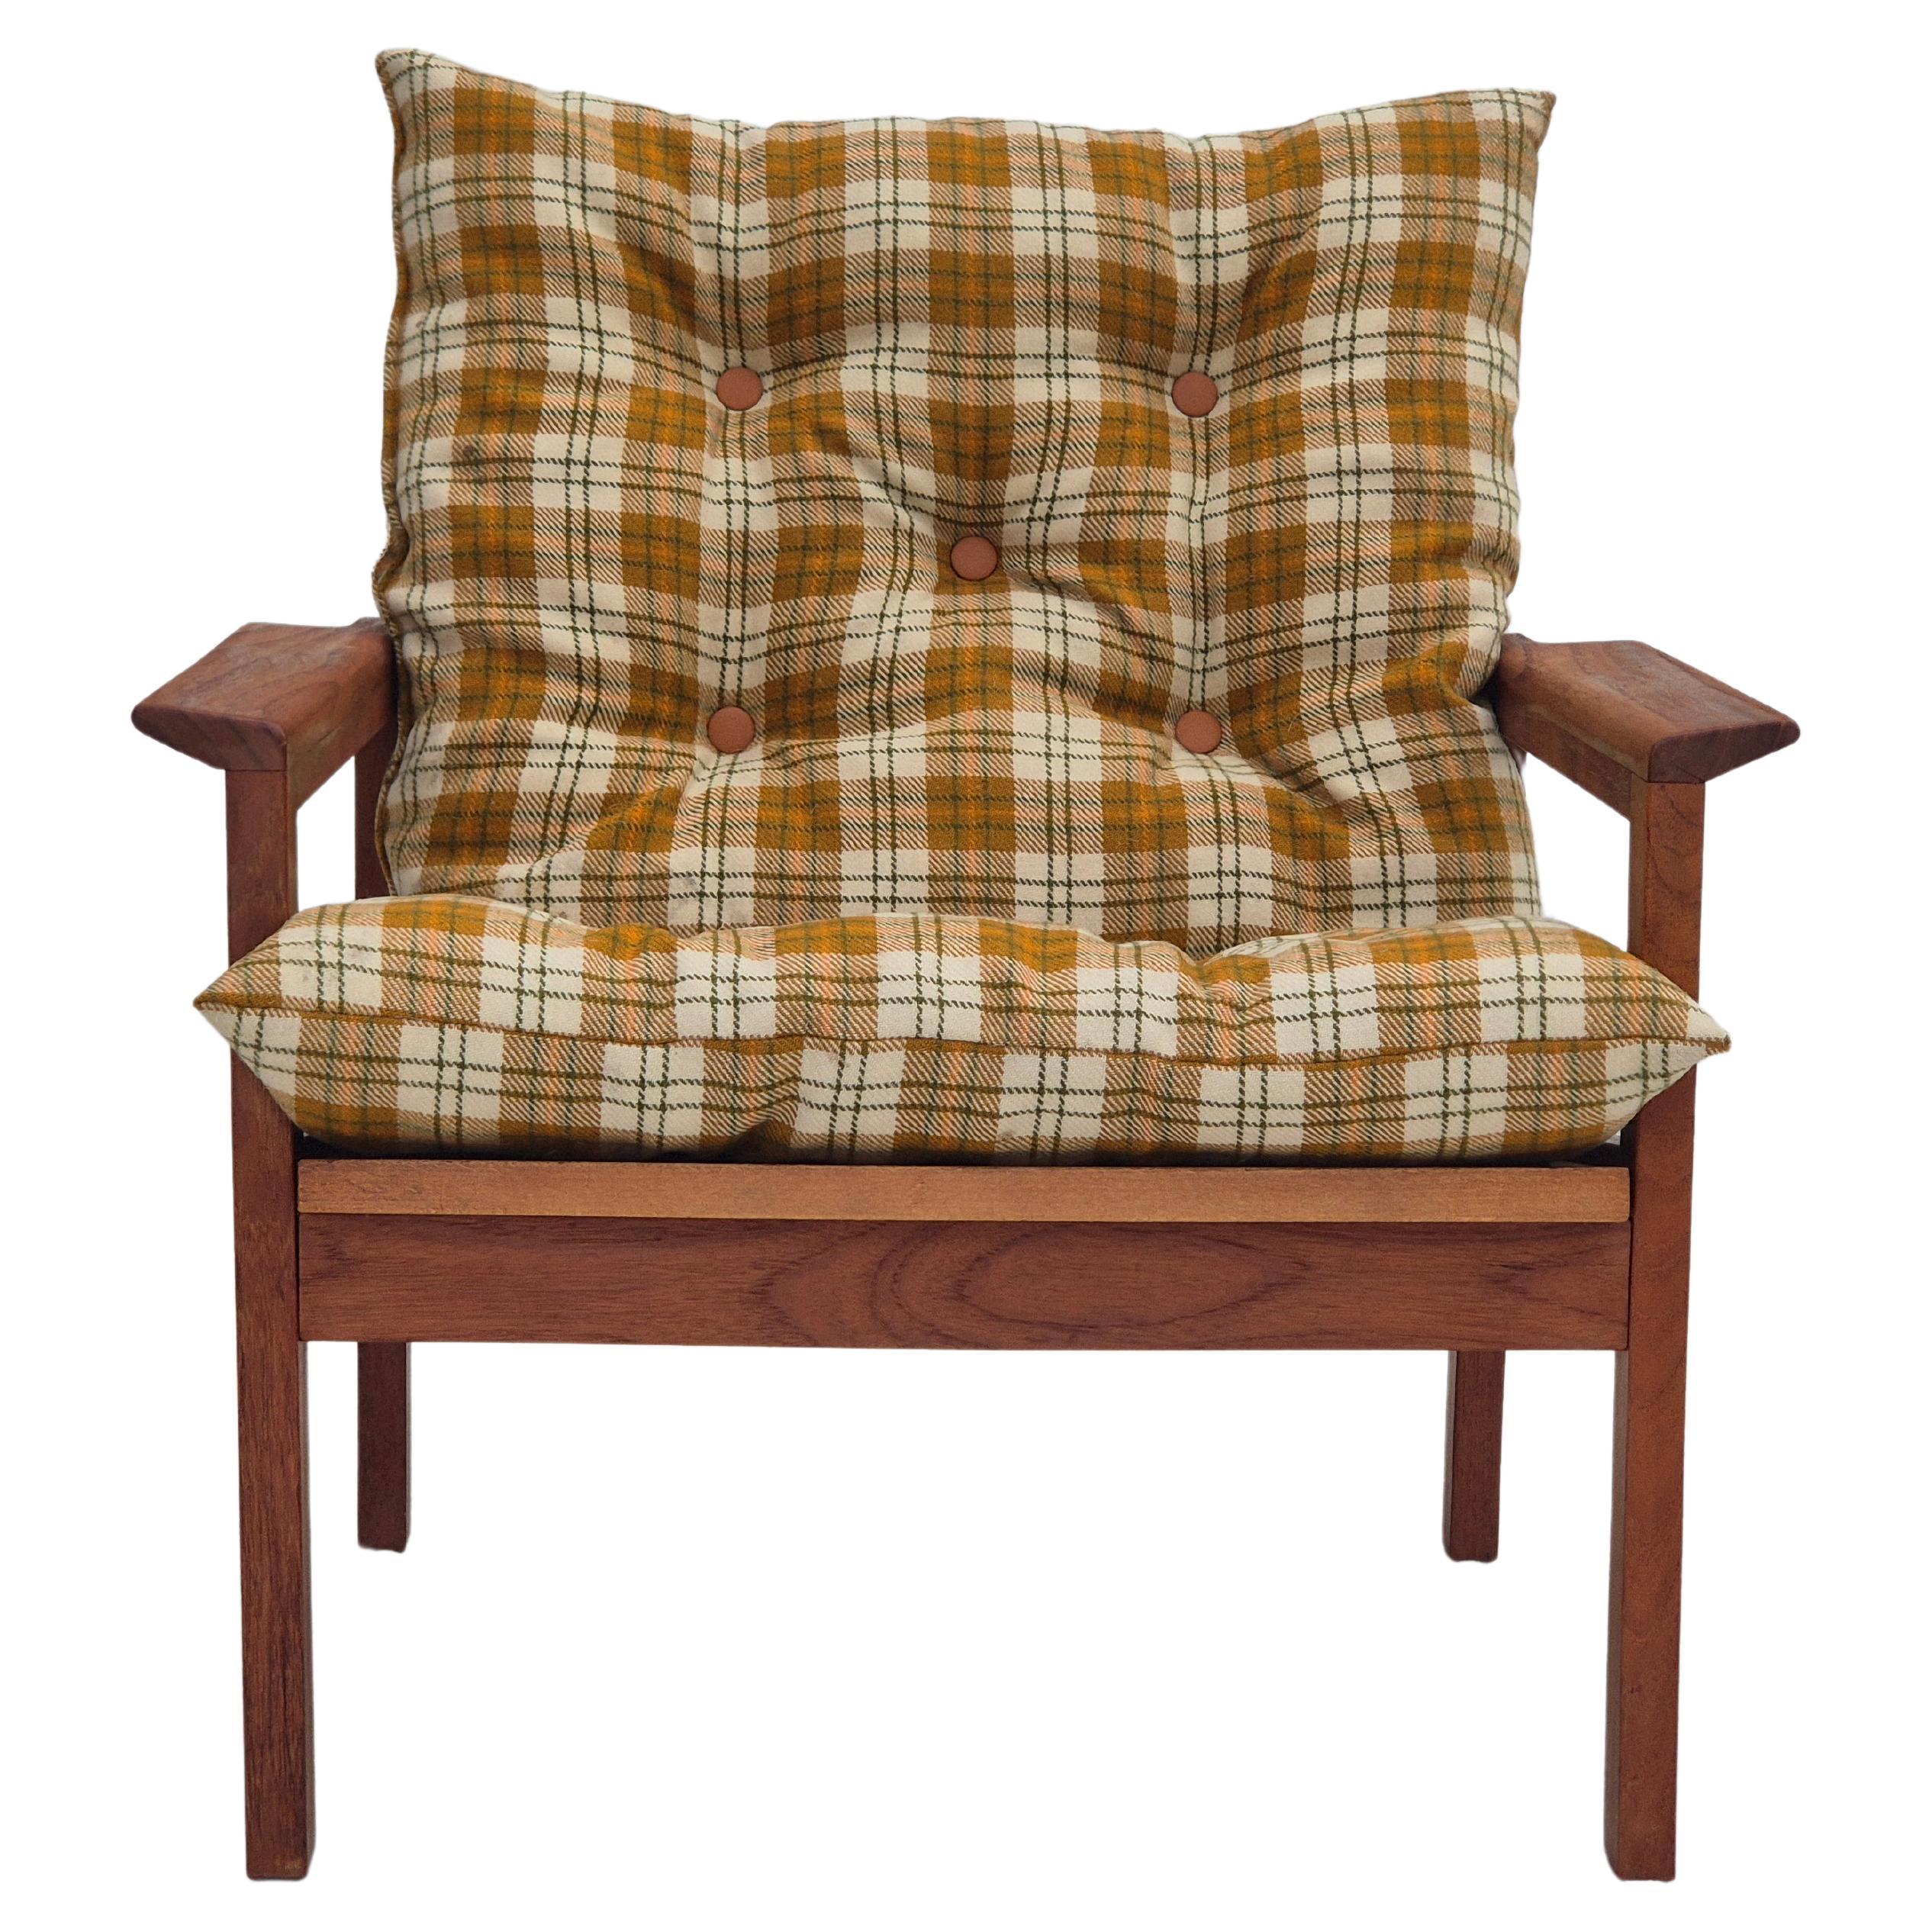 1970s, Danish lounge chair, original condition, furniture wool fabric, teak wood For Sale